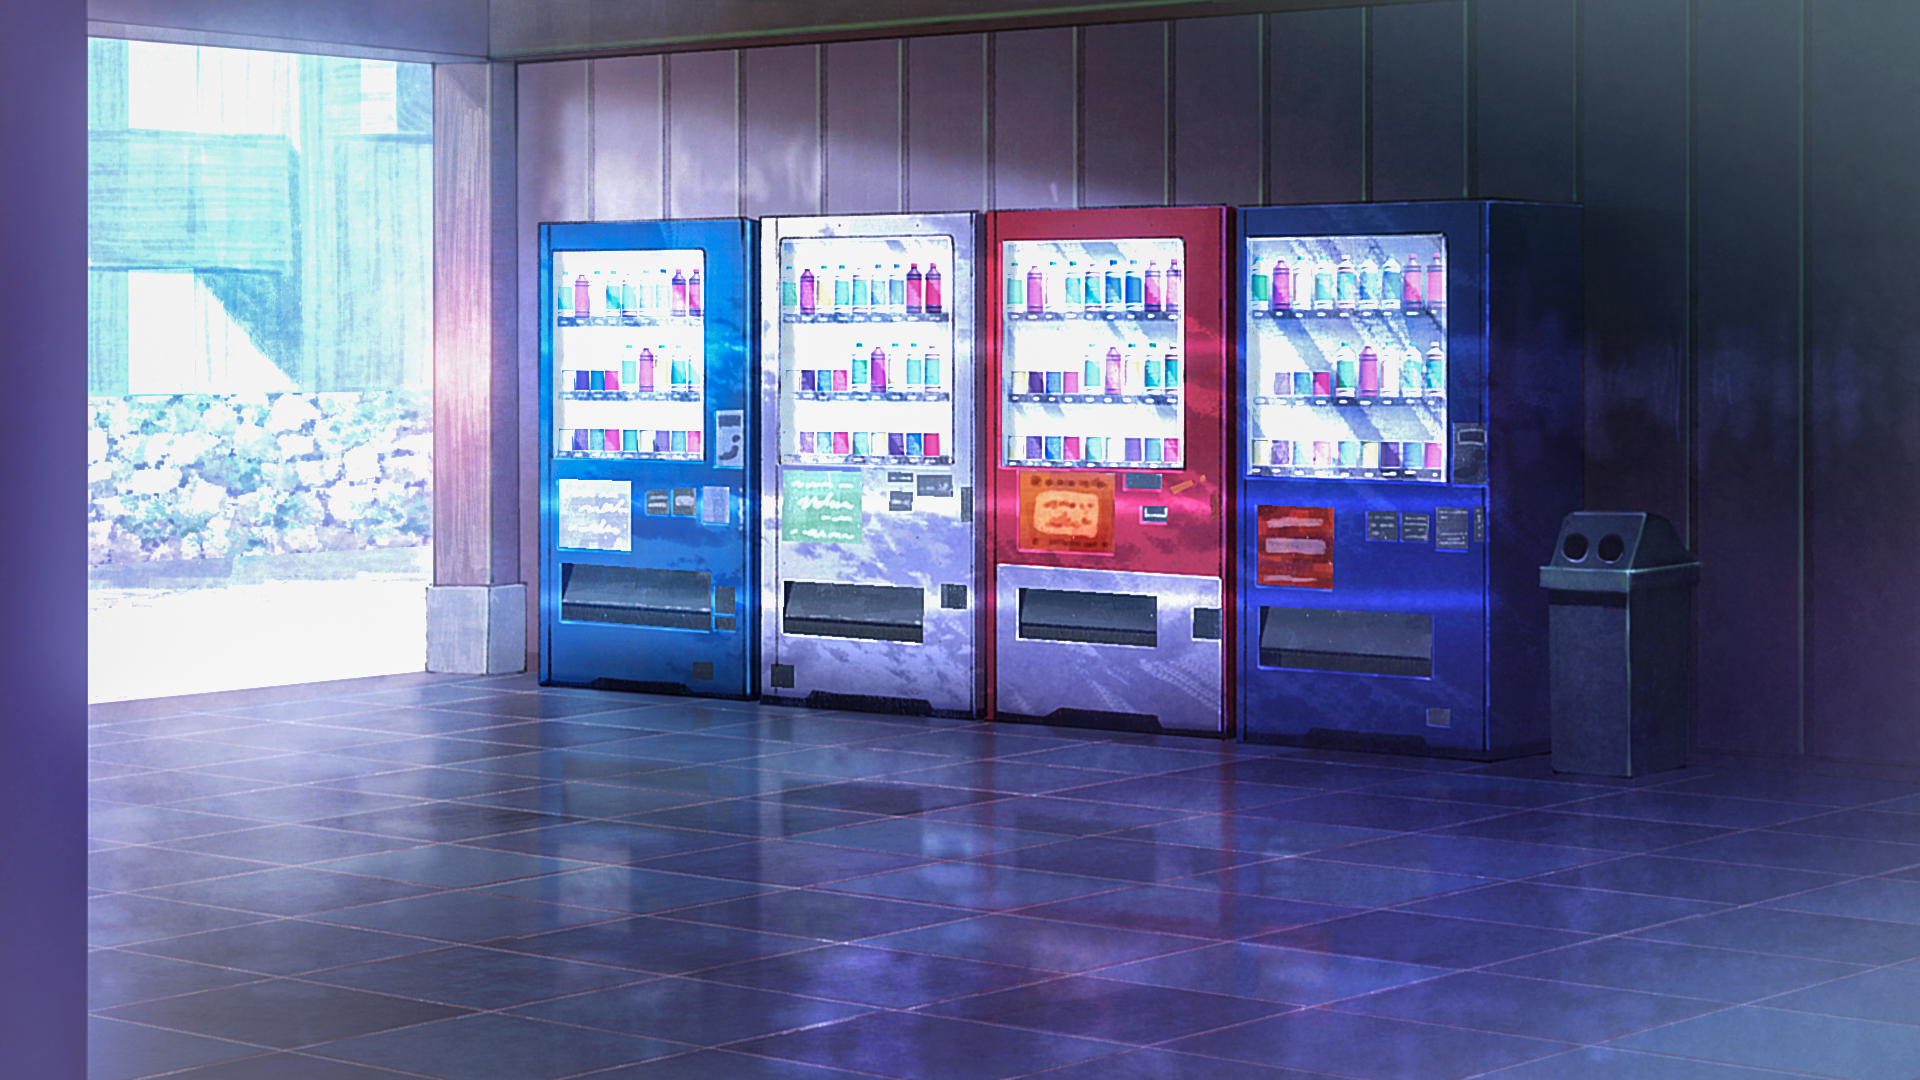 jujutsu kaisen, anime, scenery, vending machine